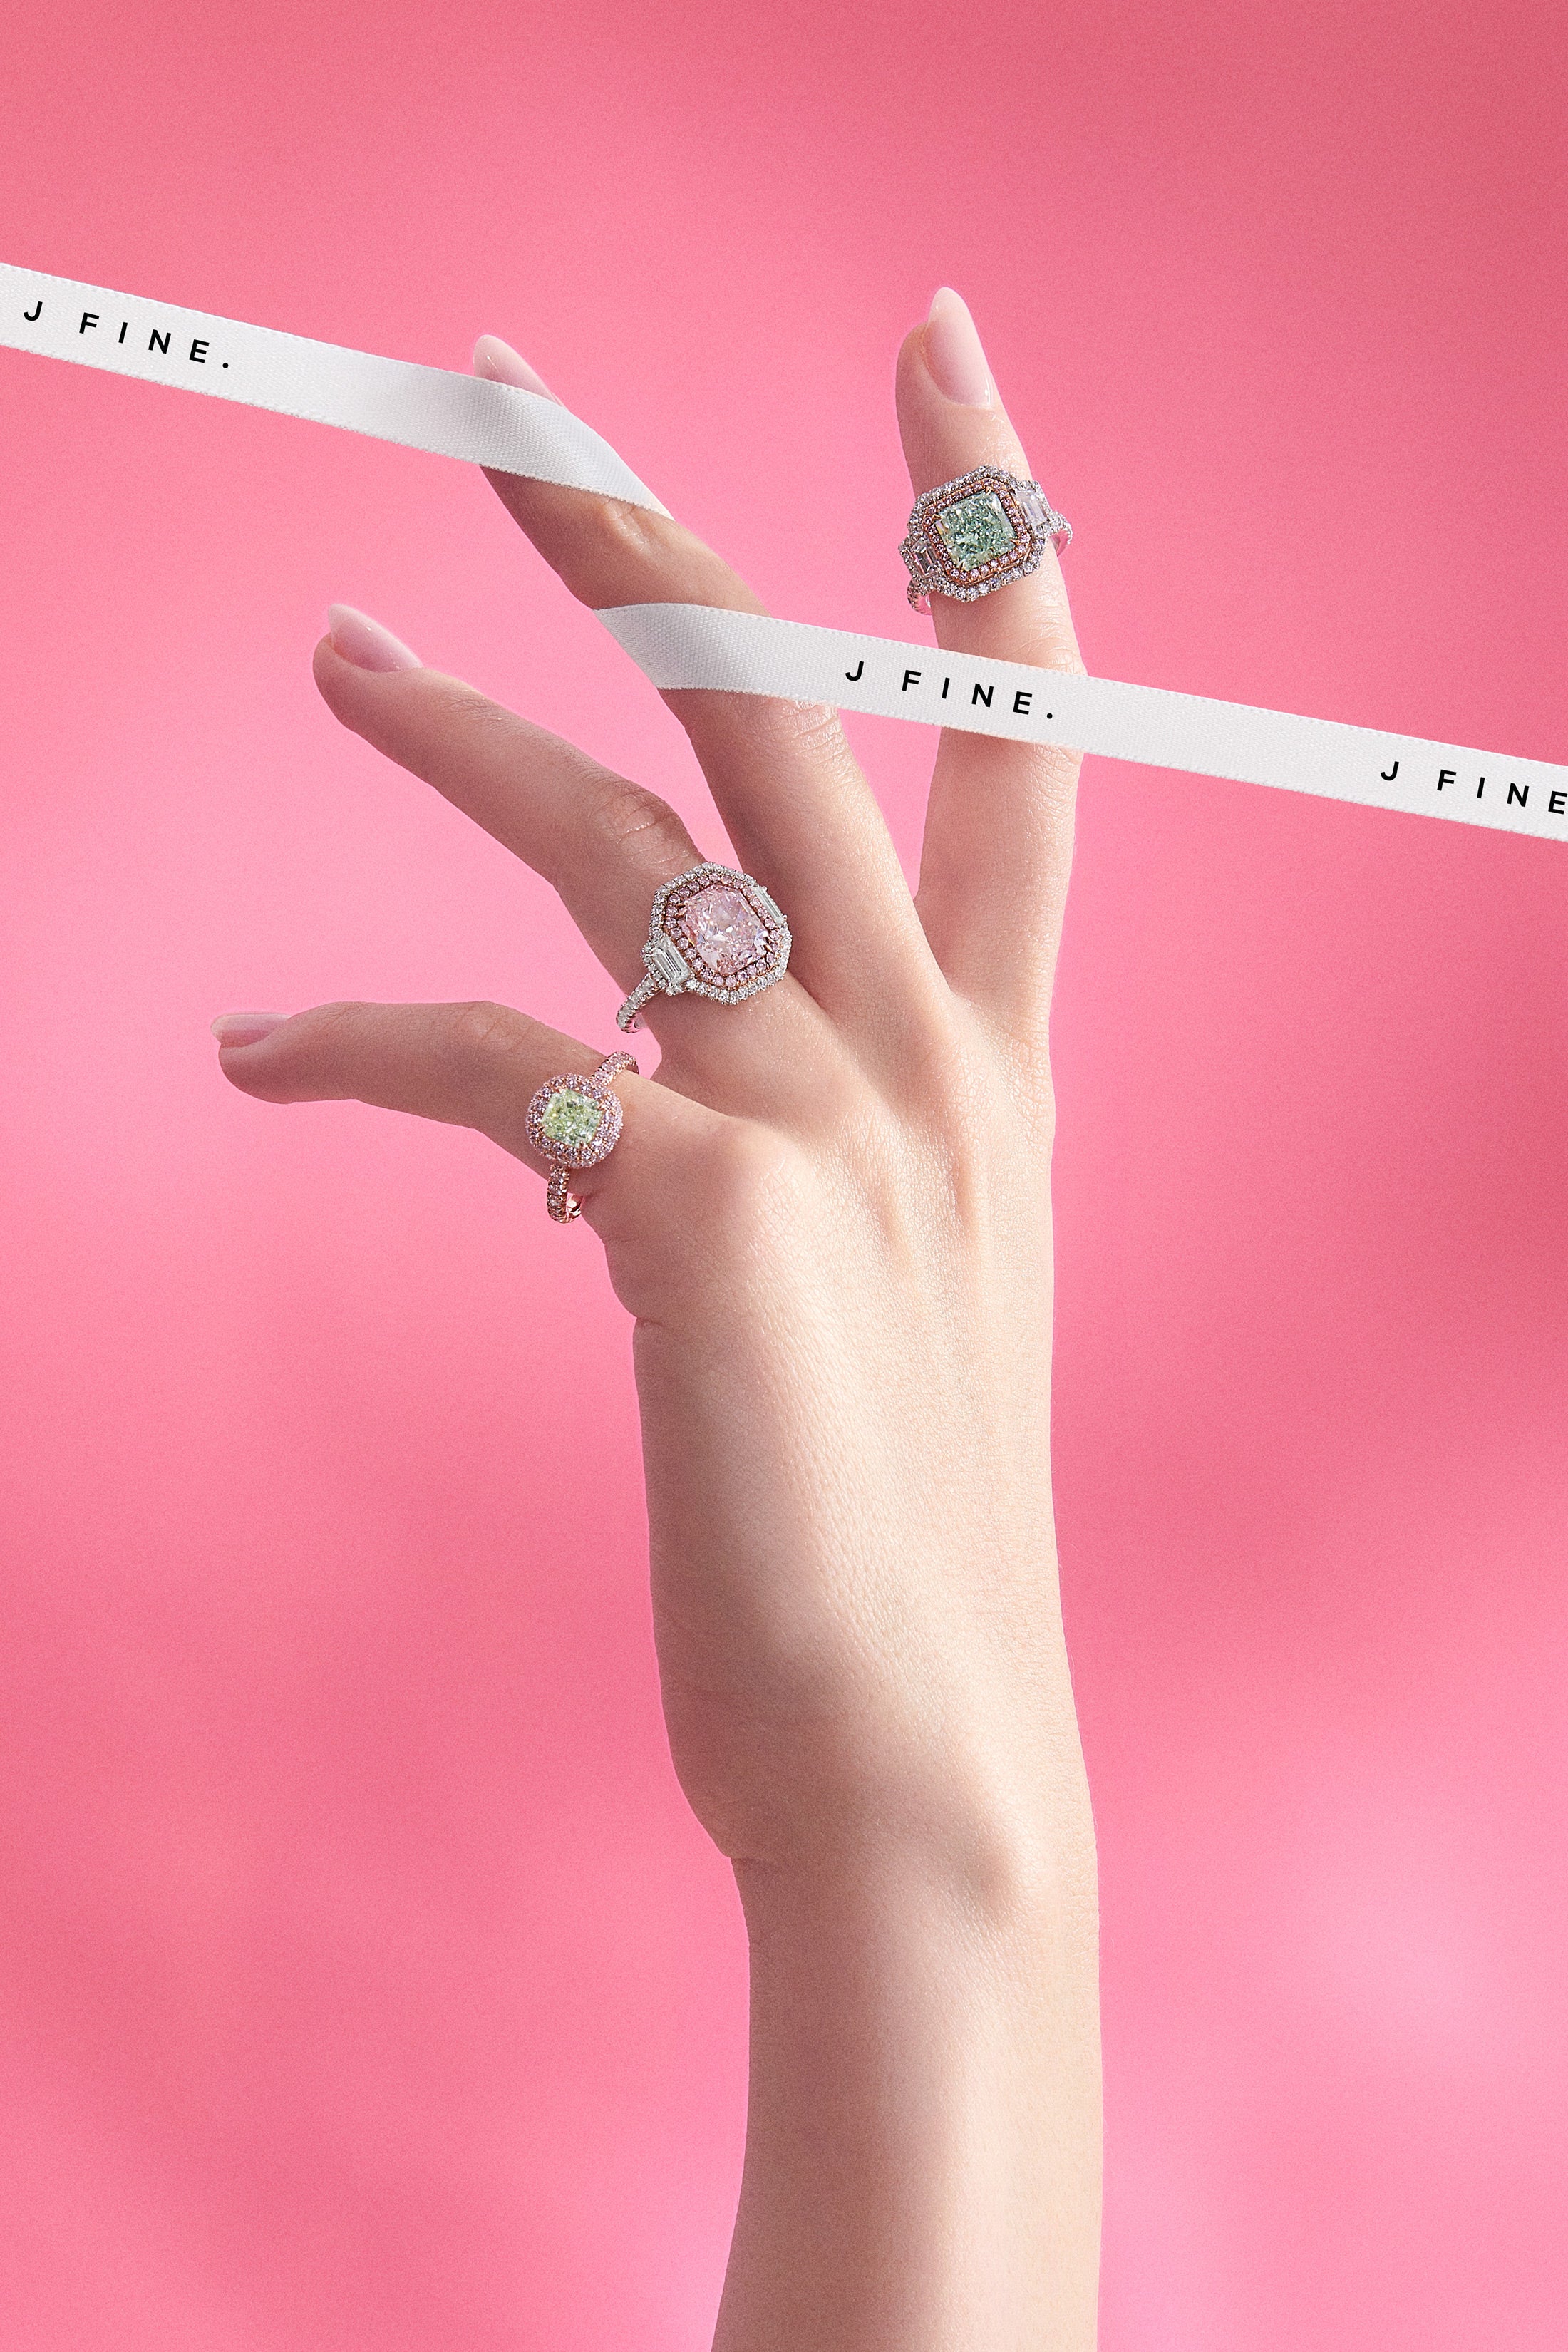 Argyle Pink™ Diamond and Green Diamond Ring - Pink Diamonds, J FINE - J Fine, Rings - Pink Diamond Jewelry, argyle-pink™-diamond-and-green-diamond-ring-by-j-fine-1 - Argyle Pink Diamonds